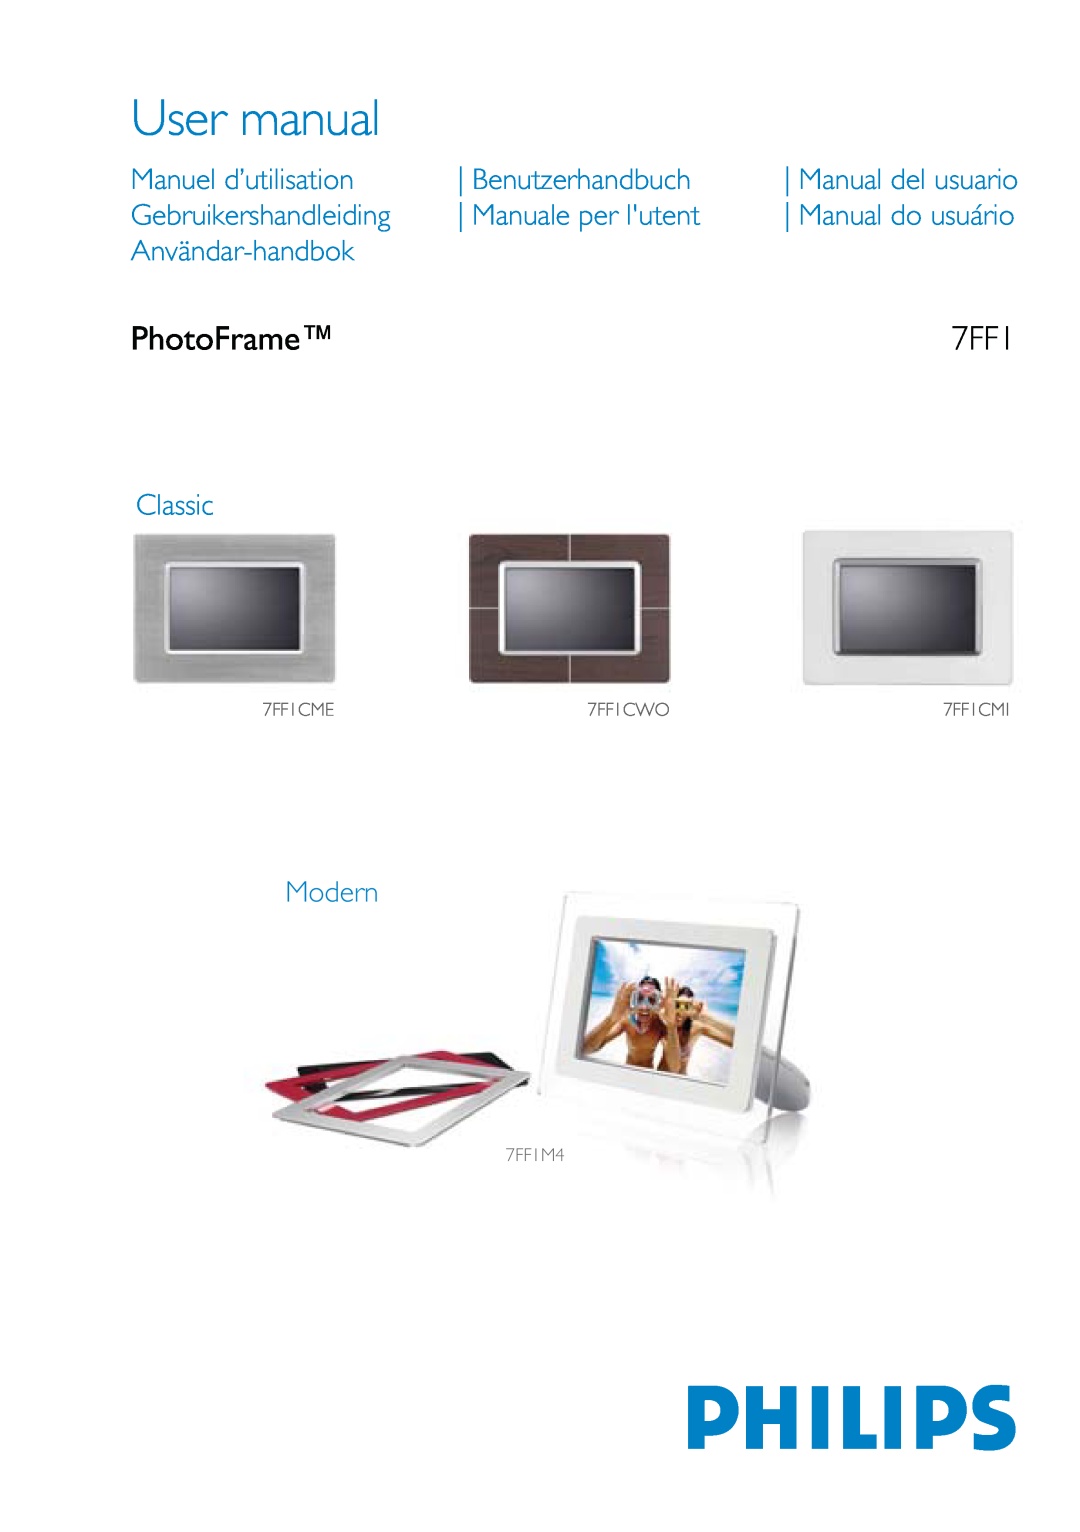 Philips 7FF1CWO user manual PhotoFrame, Manuel d’utilisation, Benutzerhandbuch, Gebruikershandleiding, Manuale per lutent 